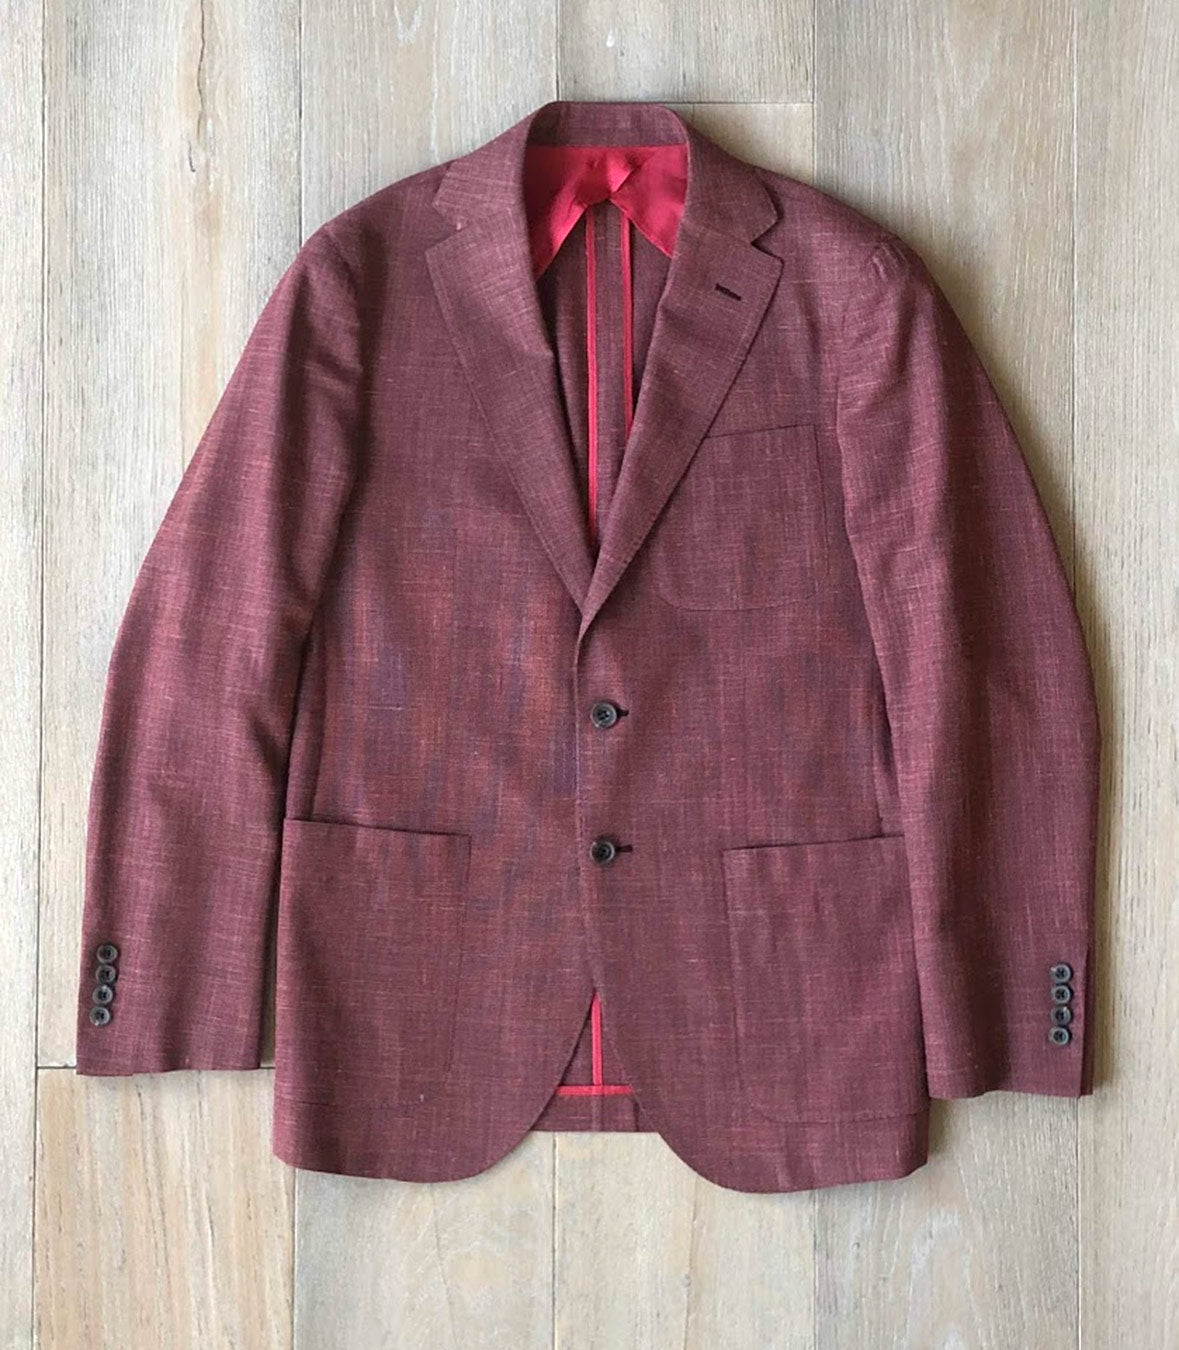 Dartmouth Jacket - Wool/Silk/Linen Blend Made in USA | RAMBLERS WAY